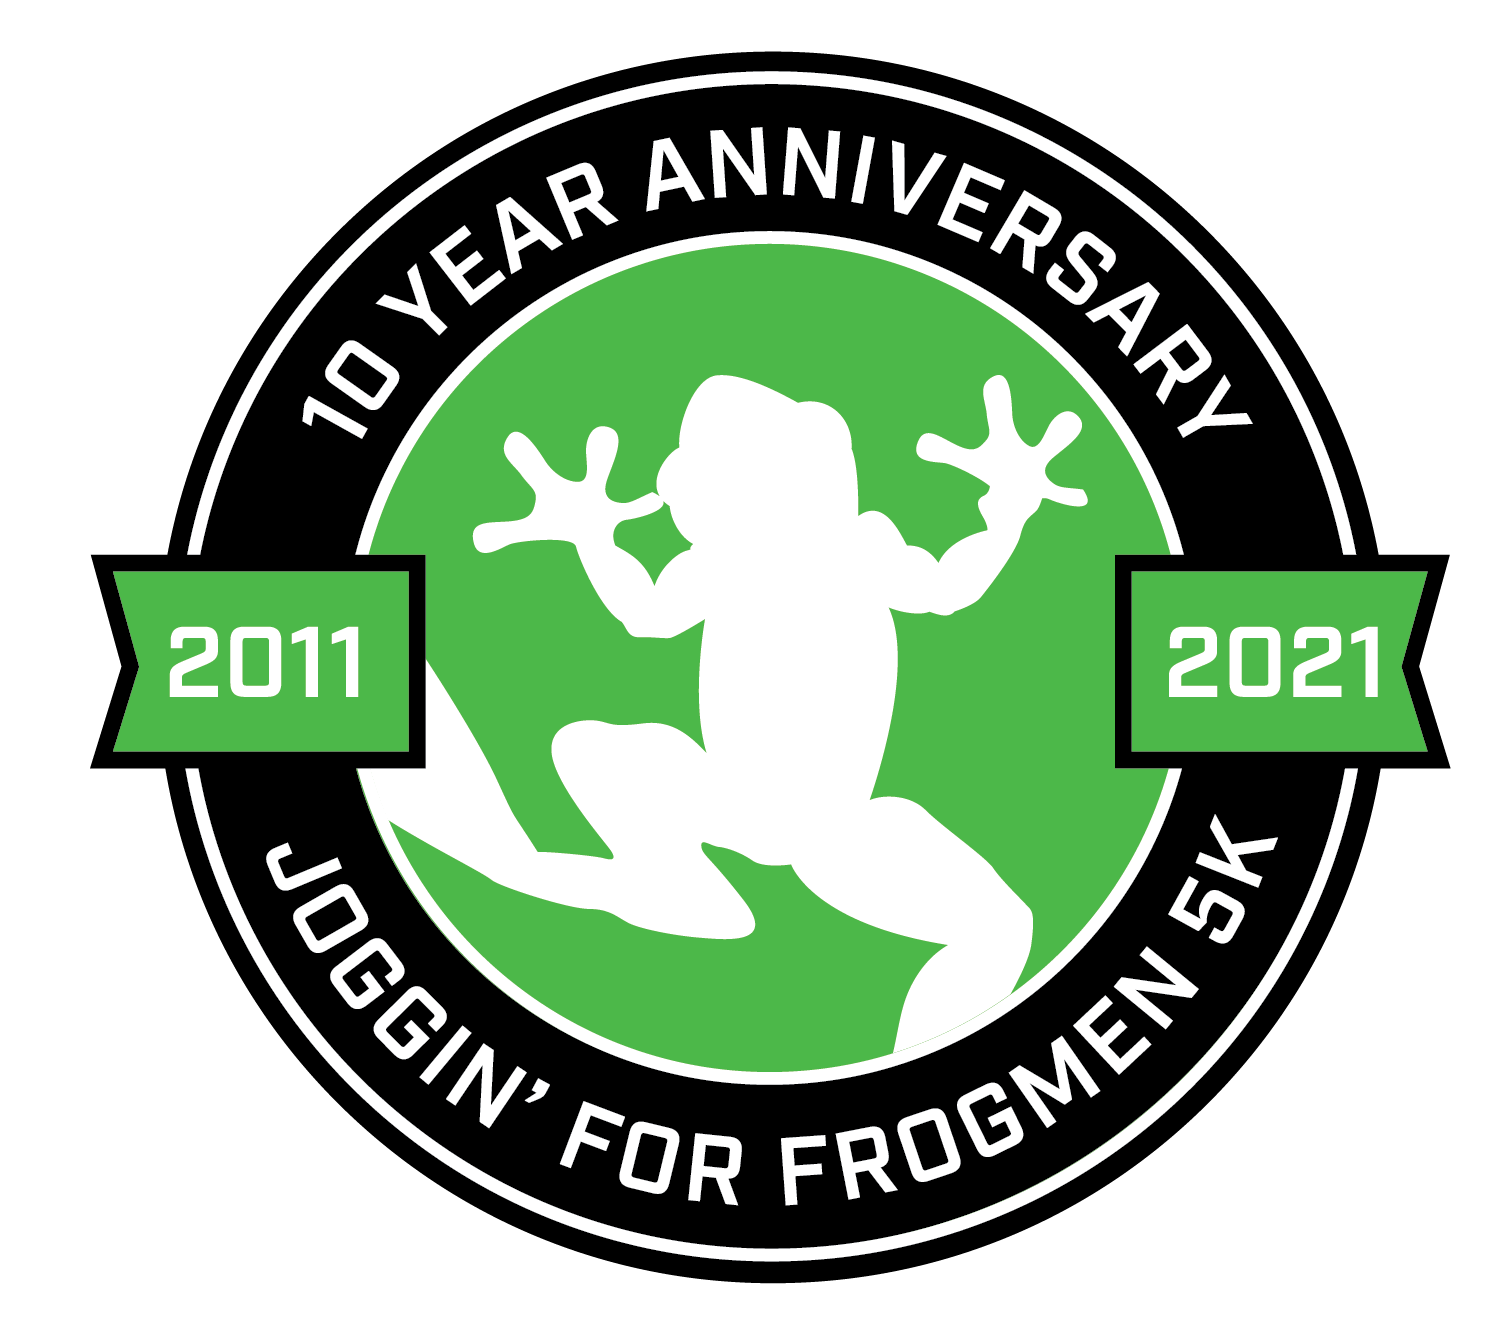 Joggin' For Frogmen - 10 Year Anniversary